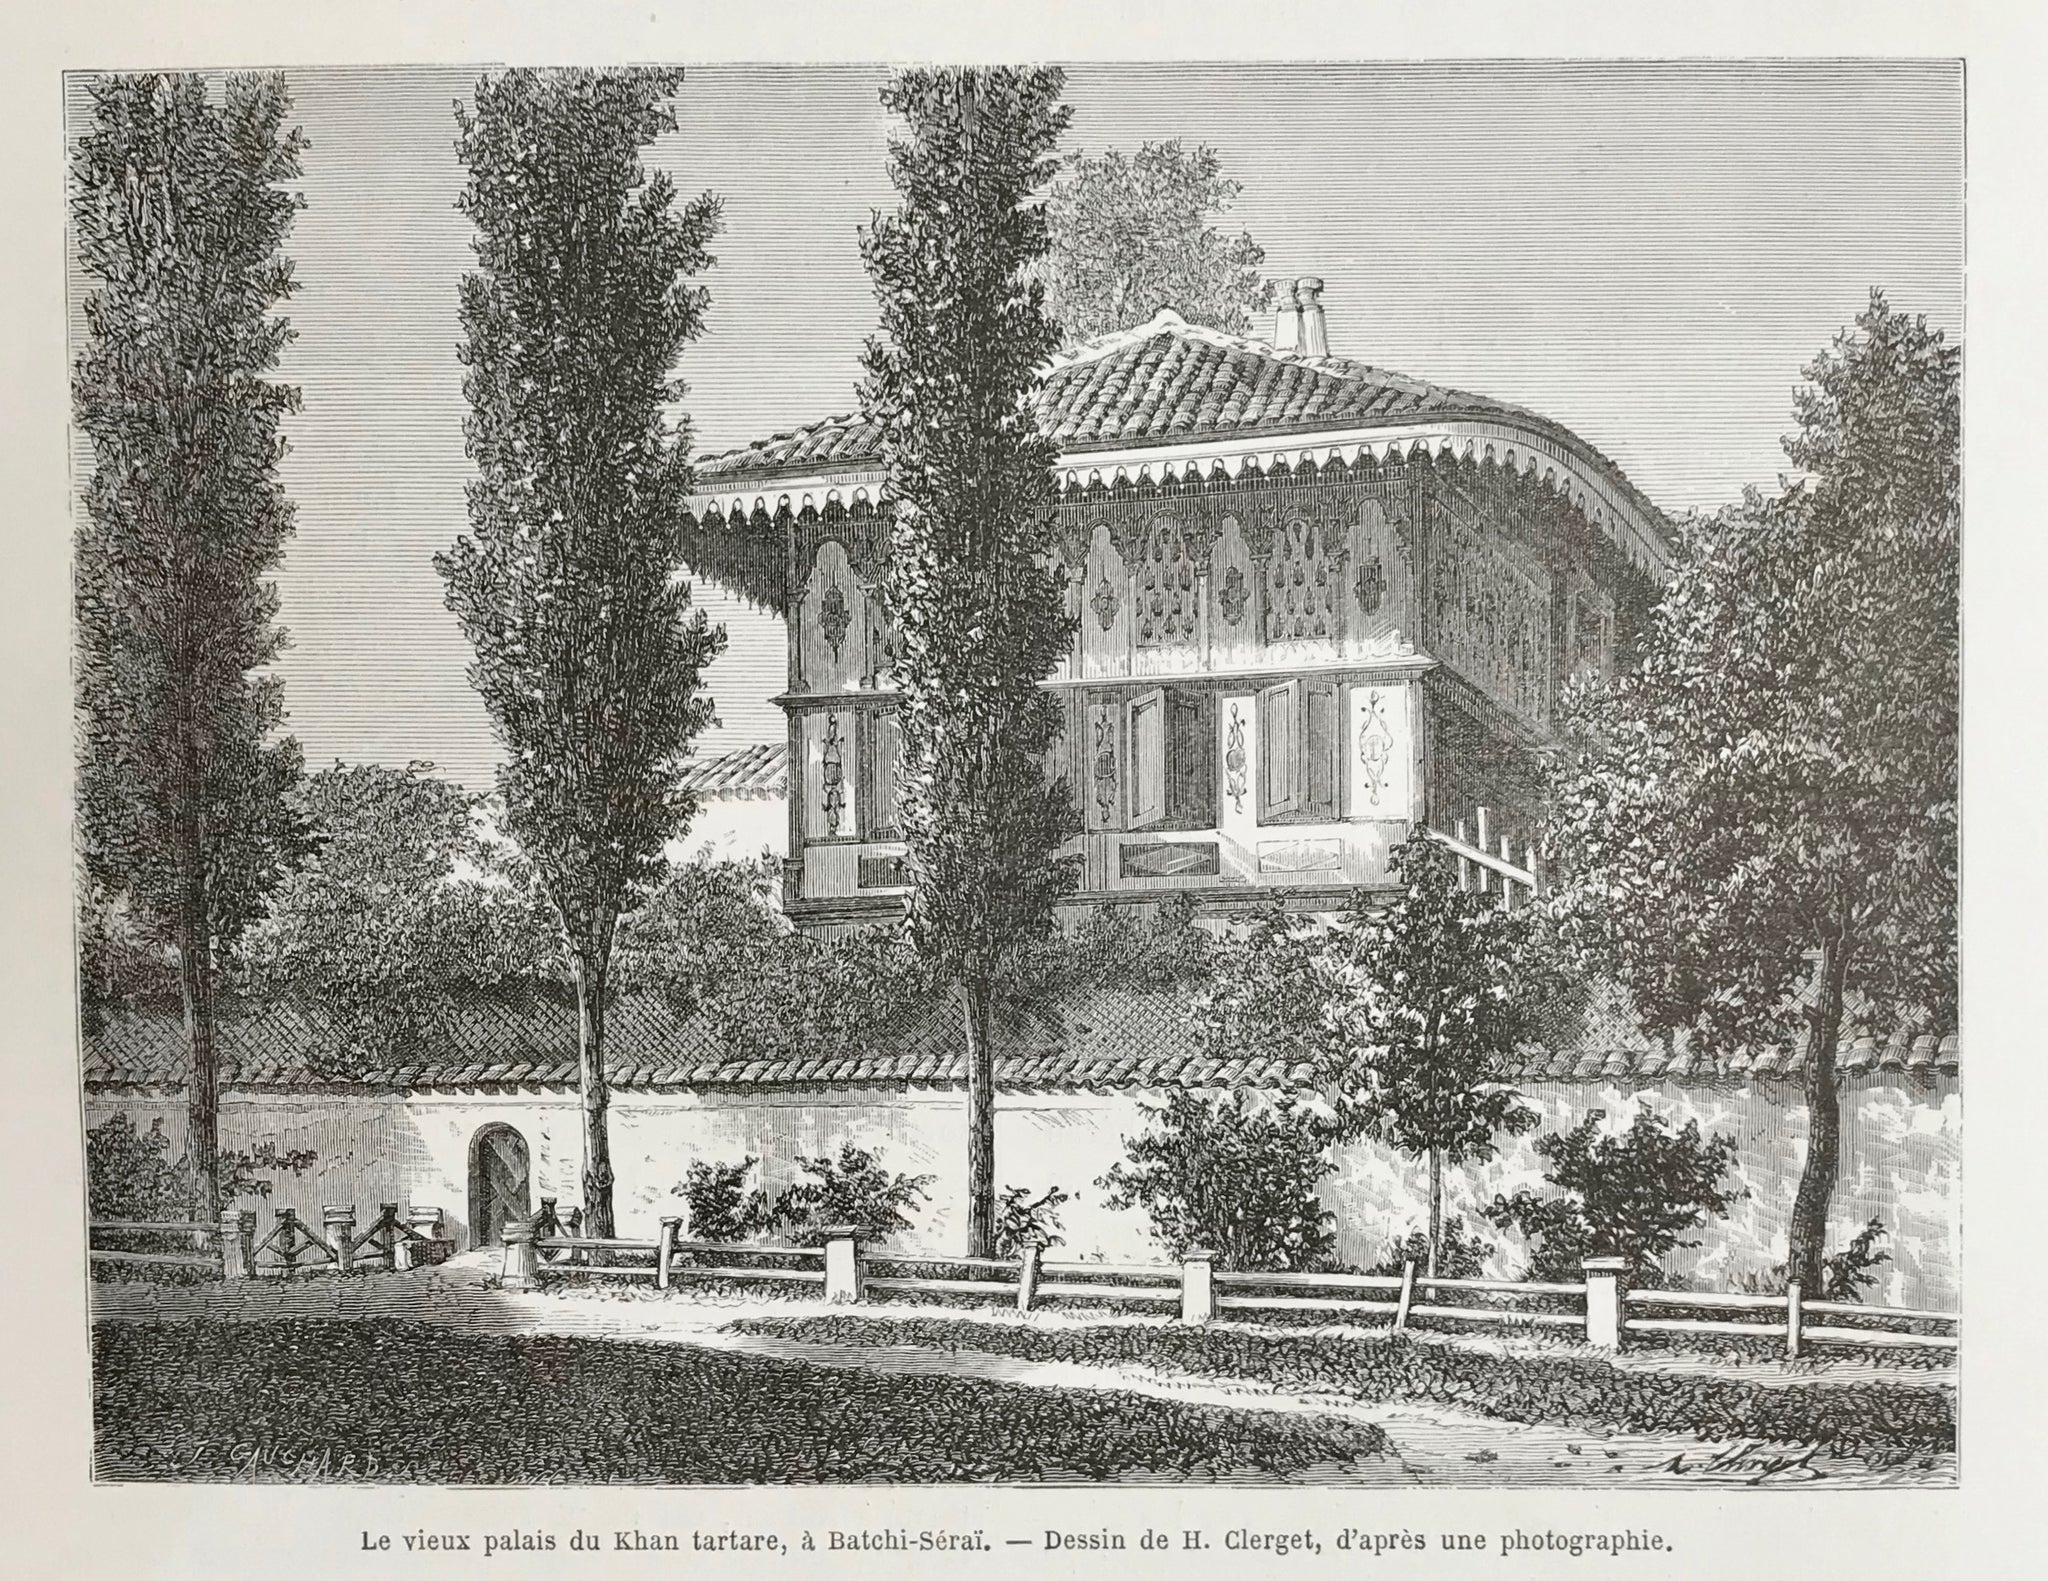 Ukraine, "Le vieux palais du Khan tartare, a Batschi-Serai."  Wood engraving by Clerget after a photograph, 1872. Reverse side is printed.